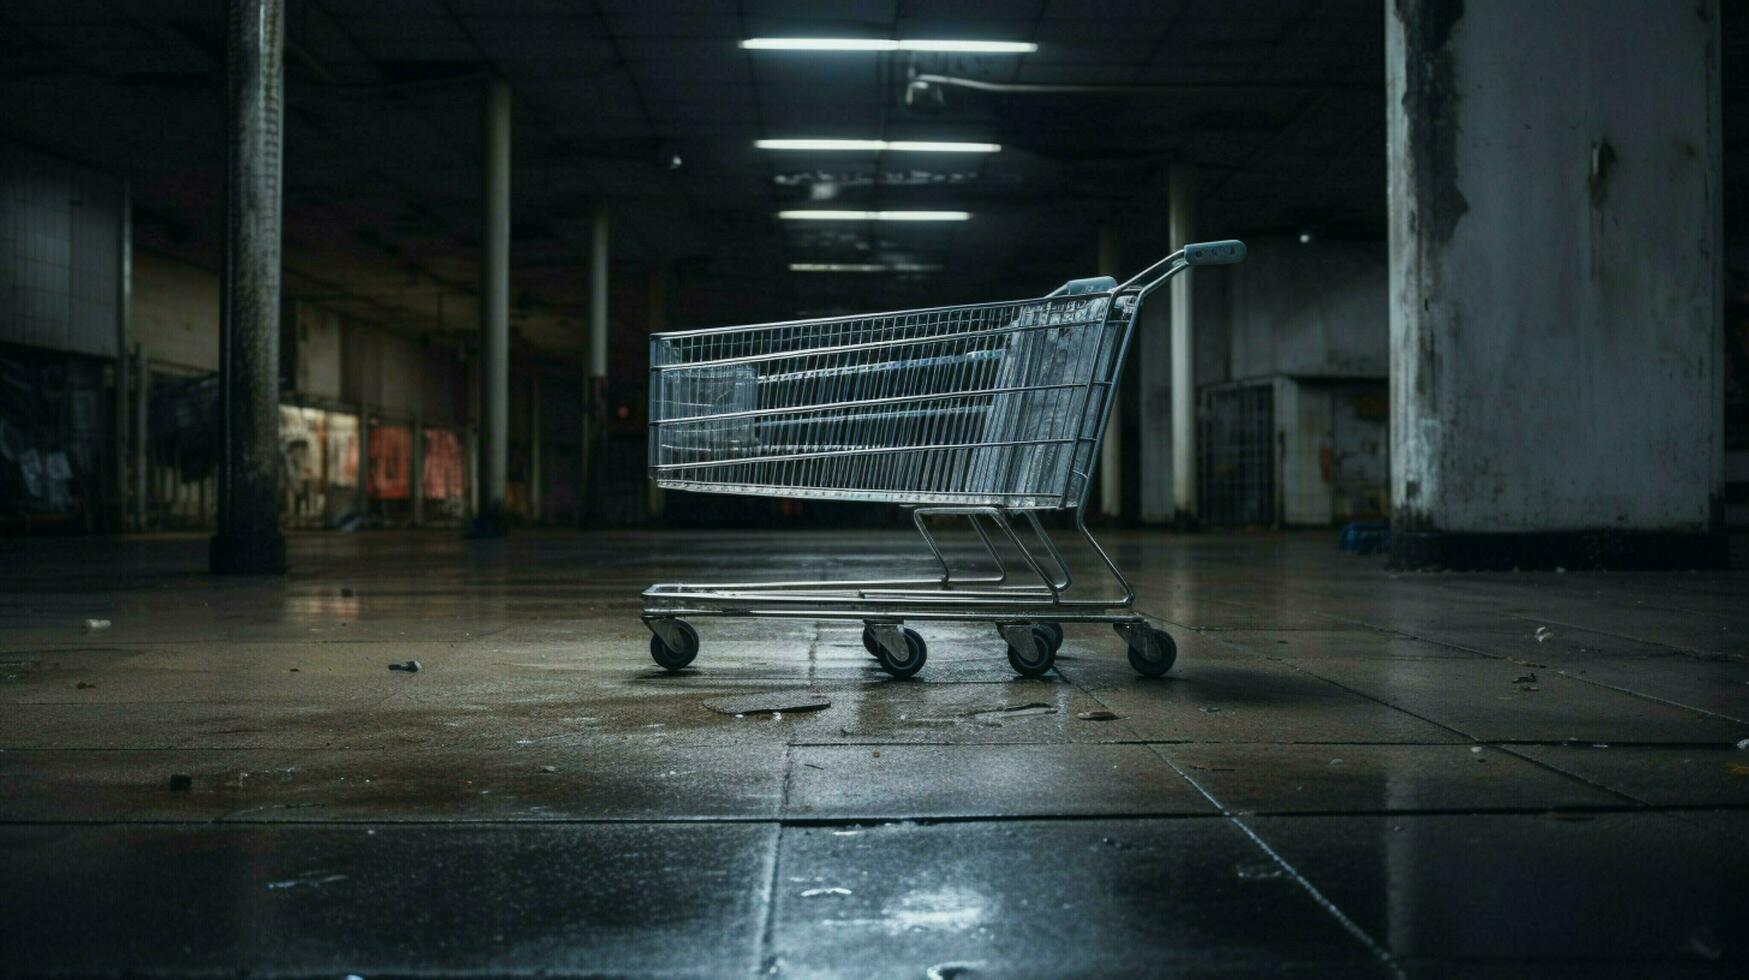 metallic shopping cart in empty supermarket photo